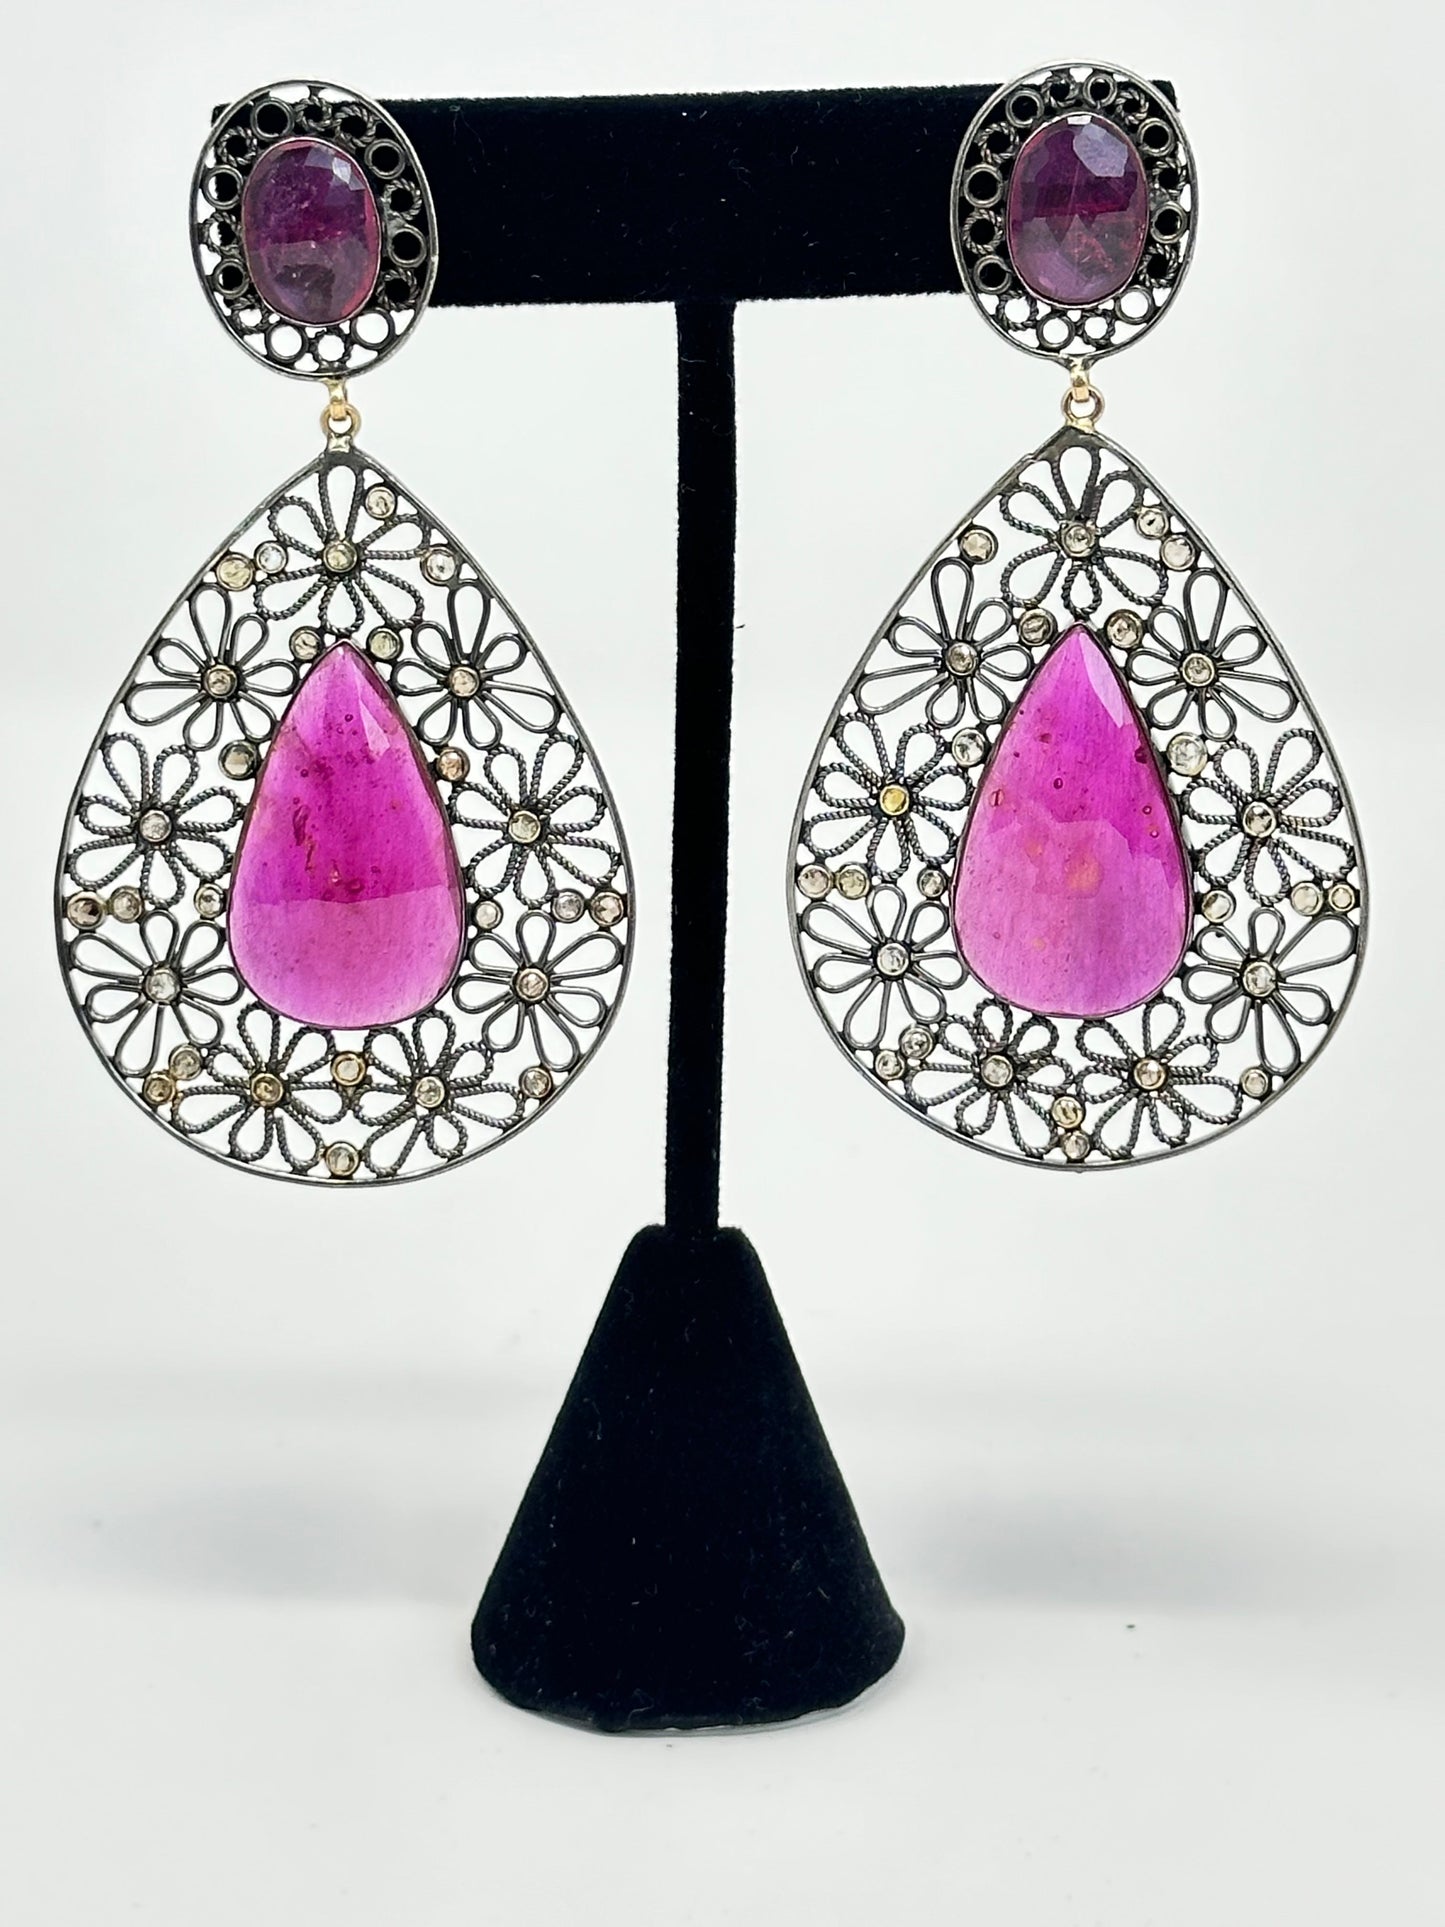 Rose Quartz and Diamond Earrings